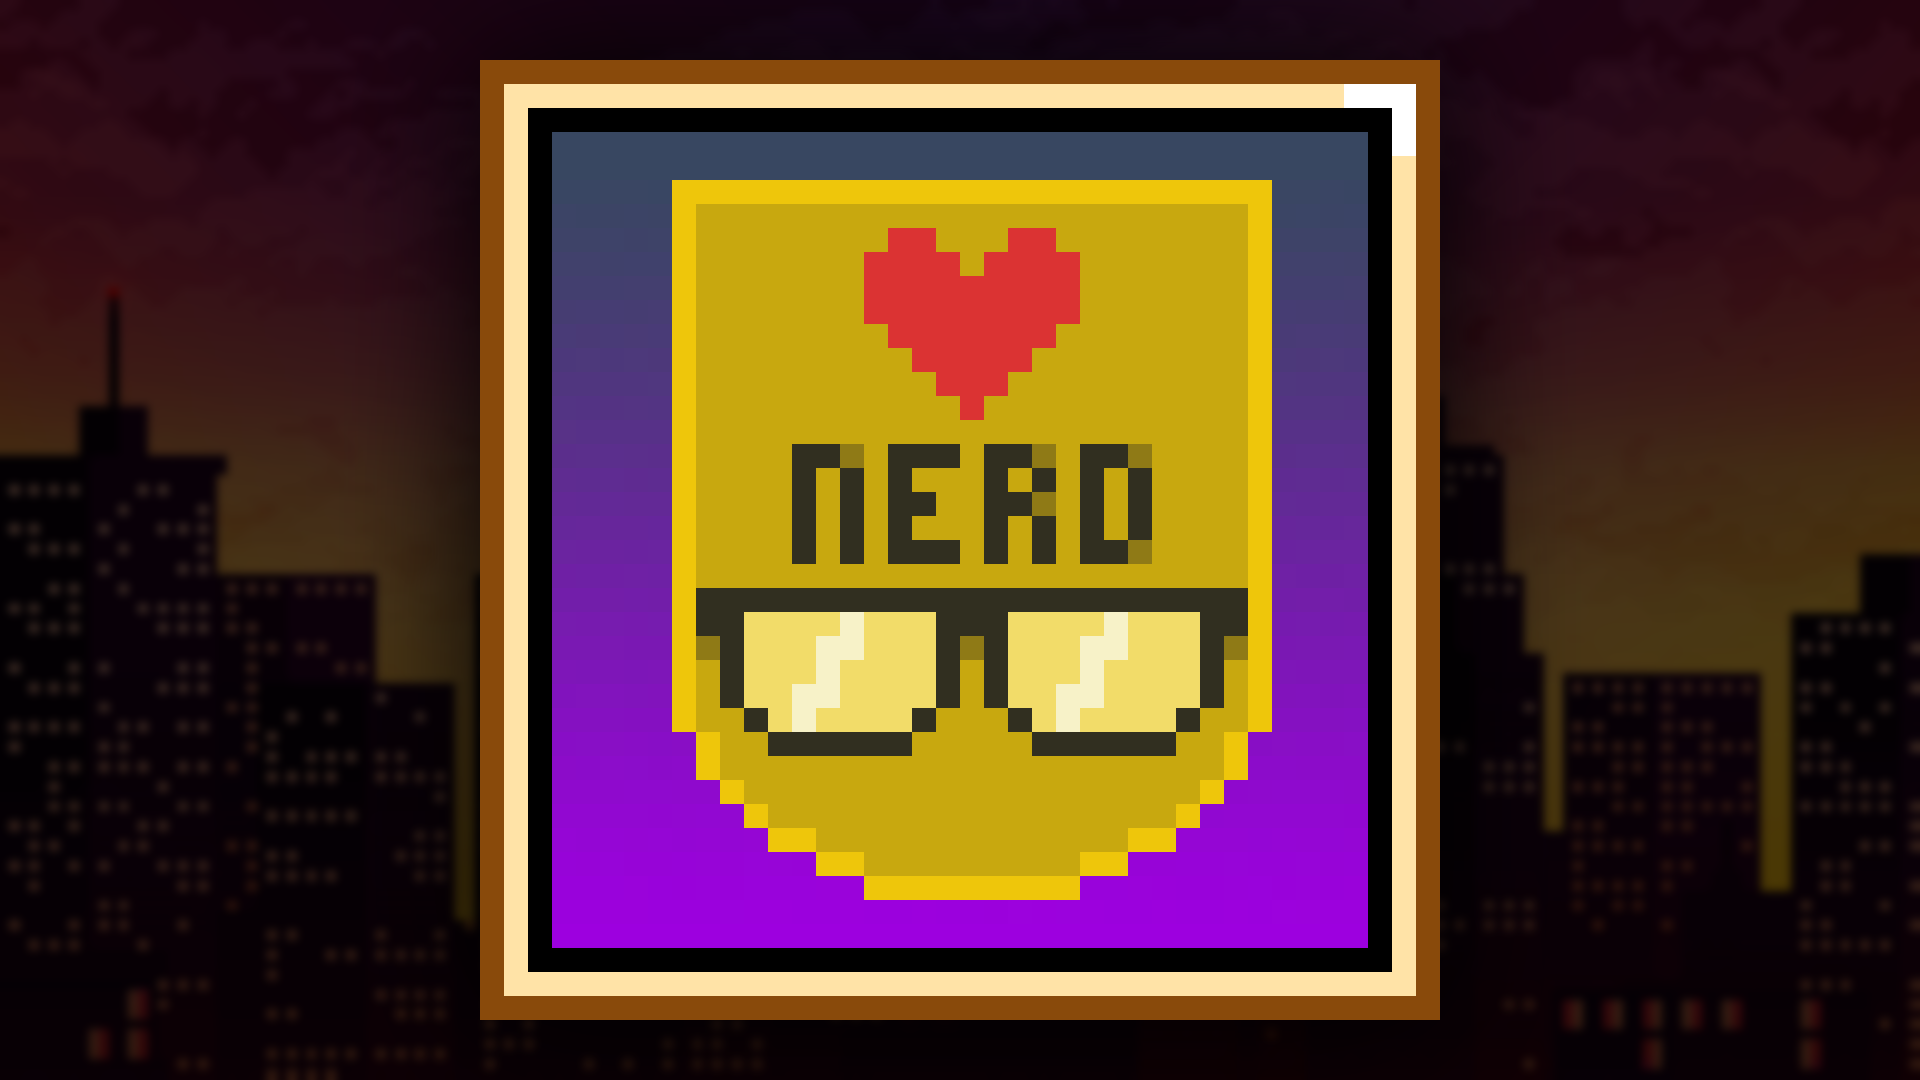 Icon for Beautiful Nerd